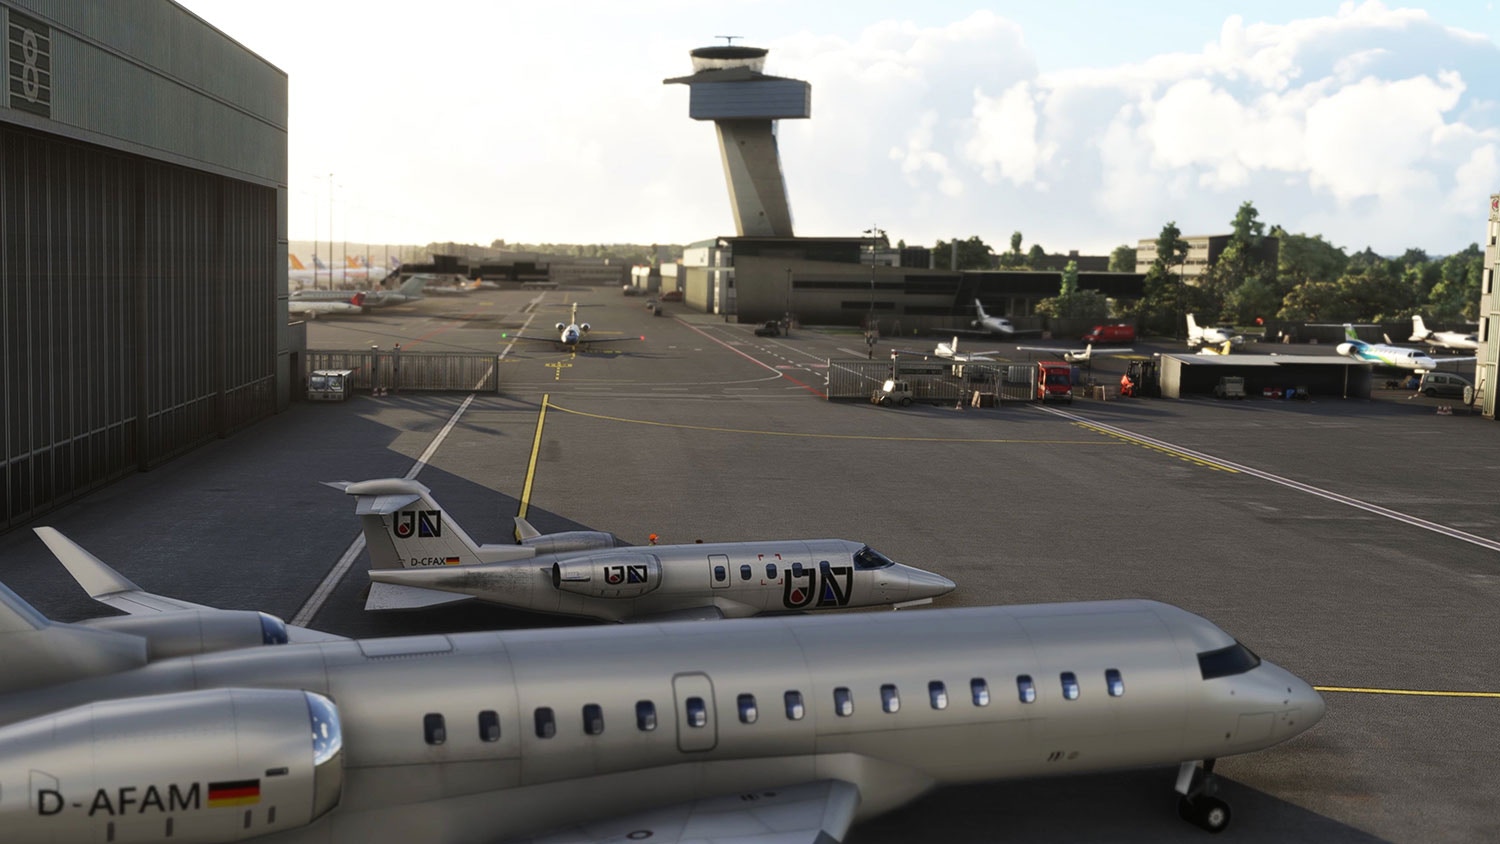 Aerosoft / Captain7 Airport Nuremberg Released for MSFS